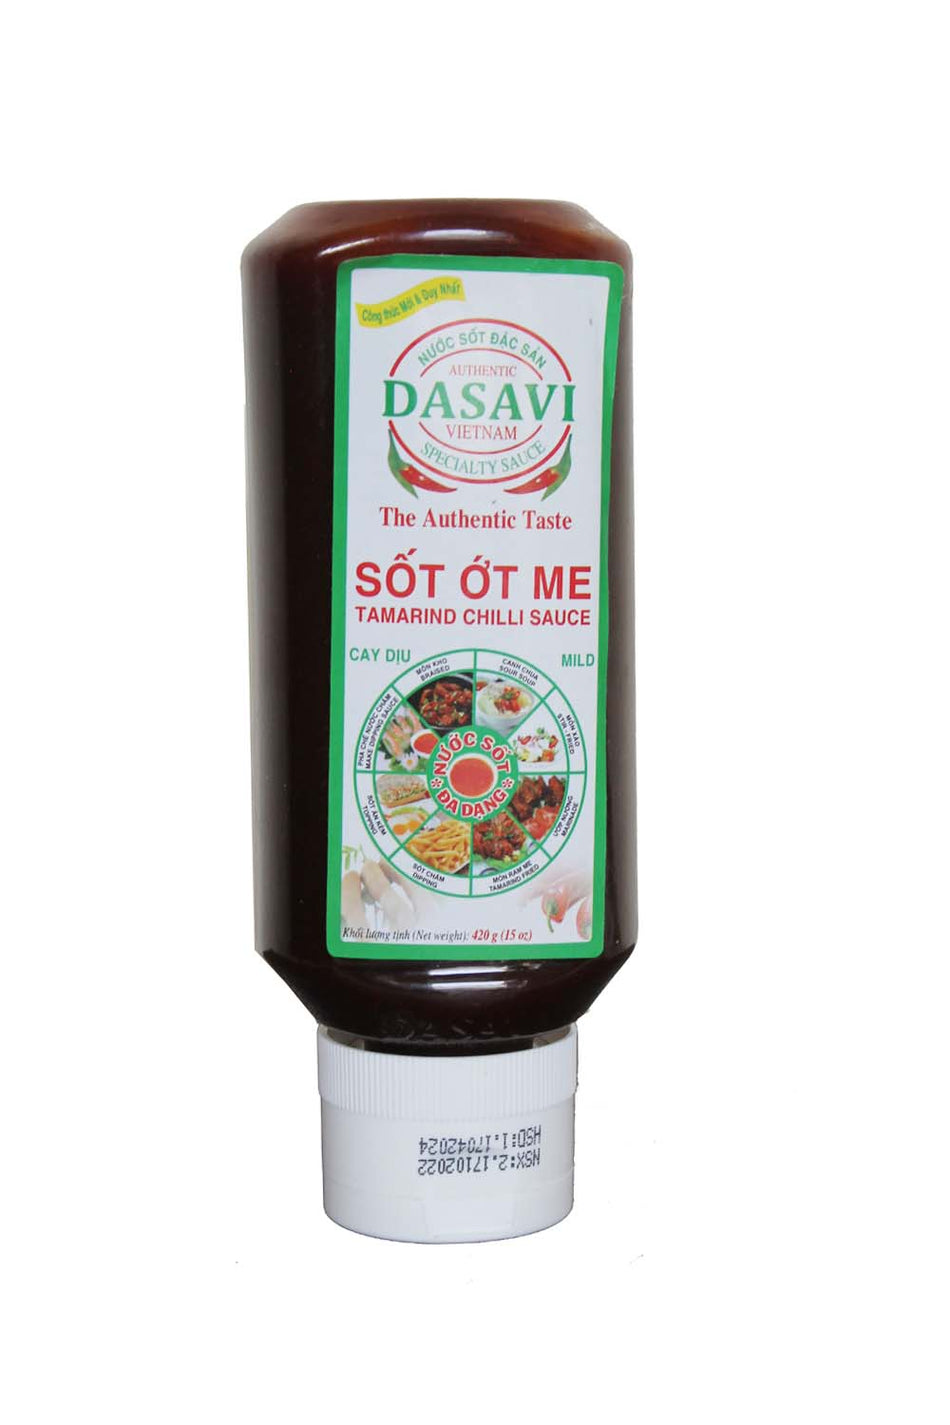 Dasavi Tamarind Chili Sauce